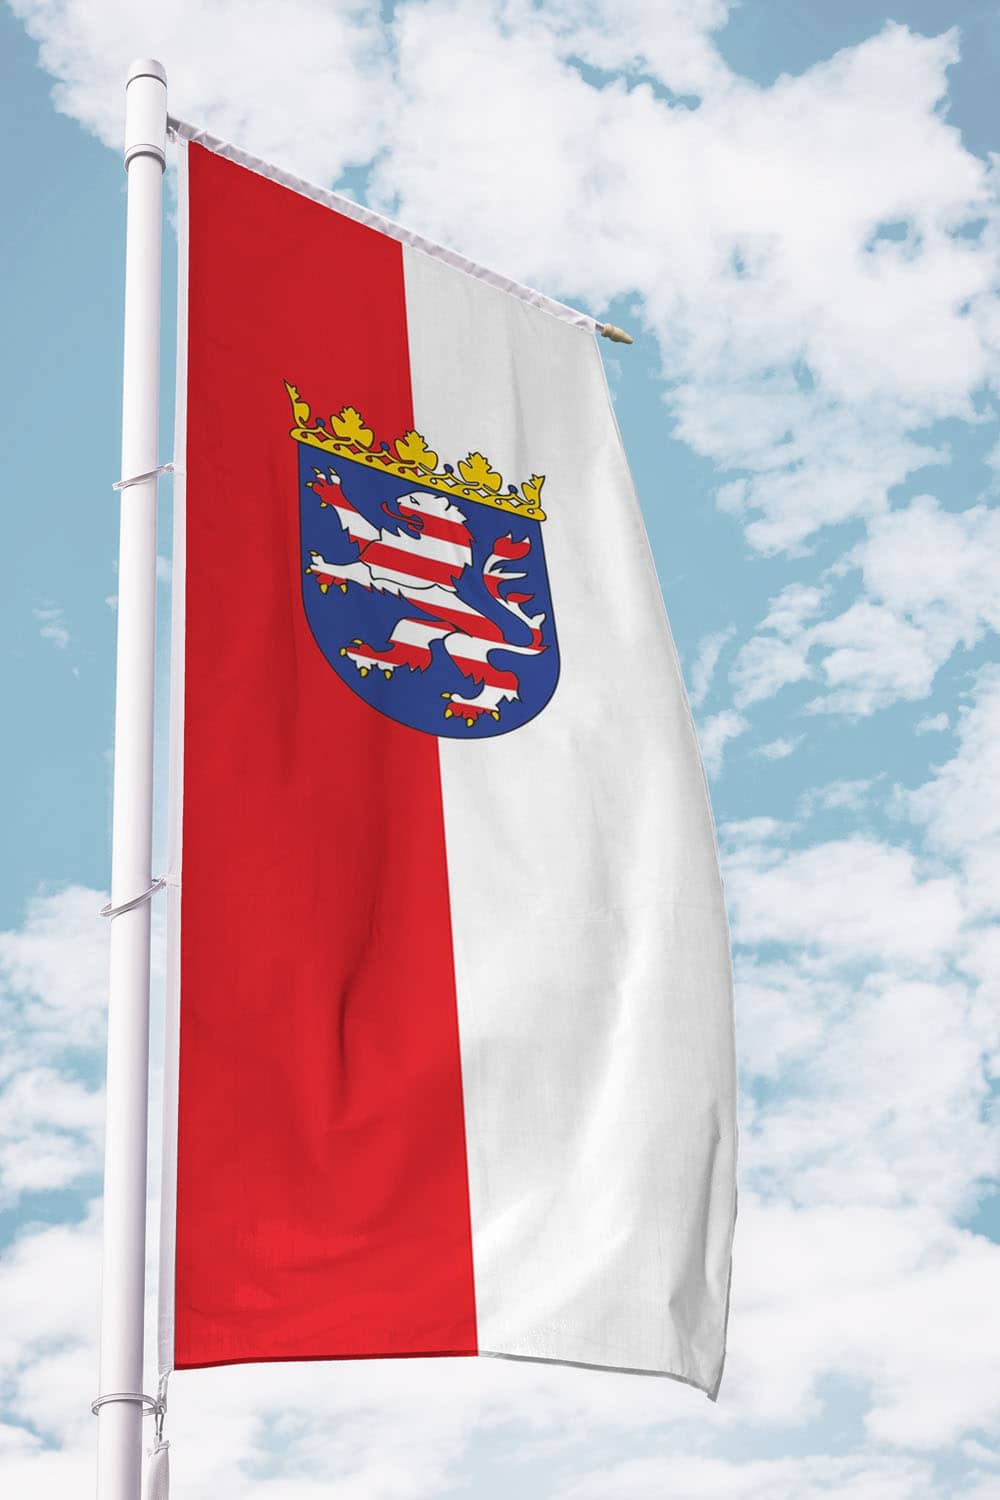 Hessen-Fahne-Ausleger Hochformat mit Wappen